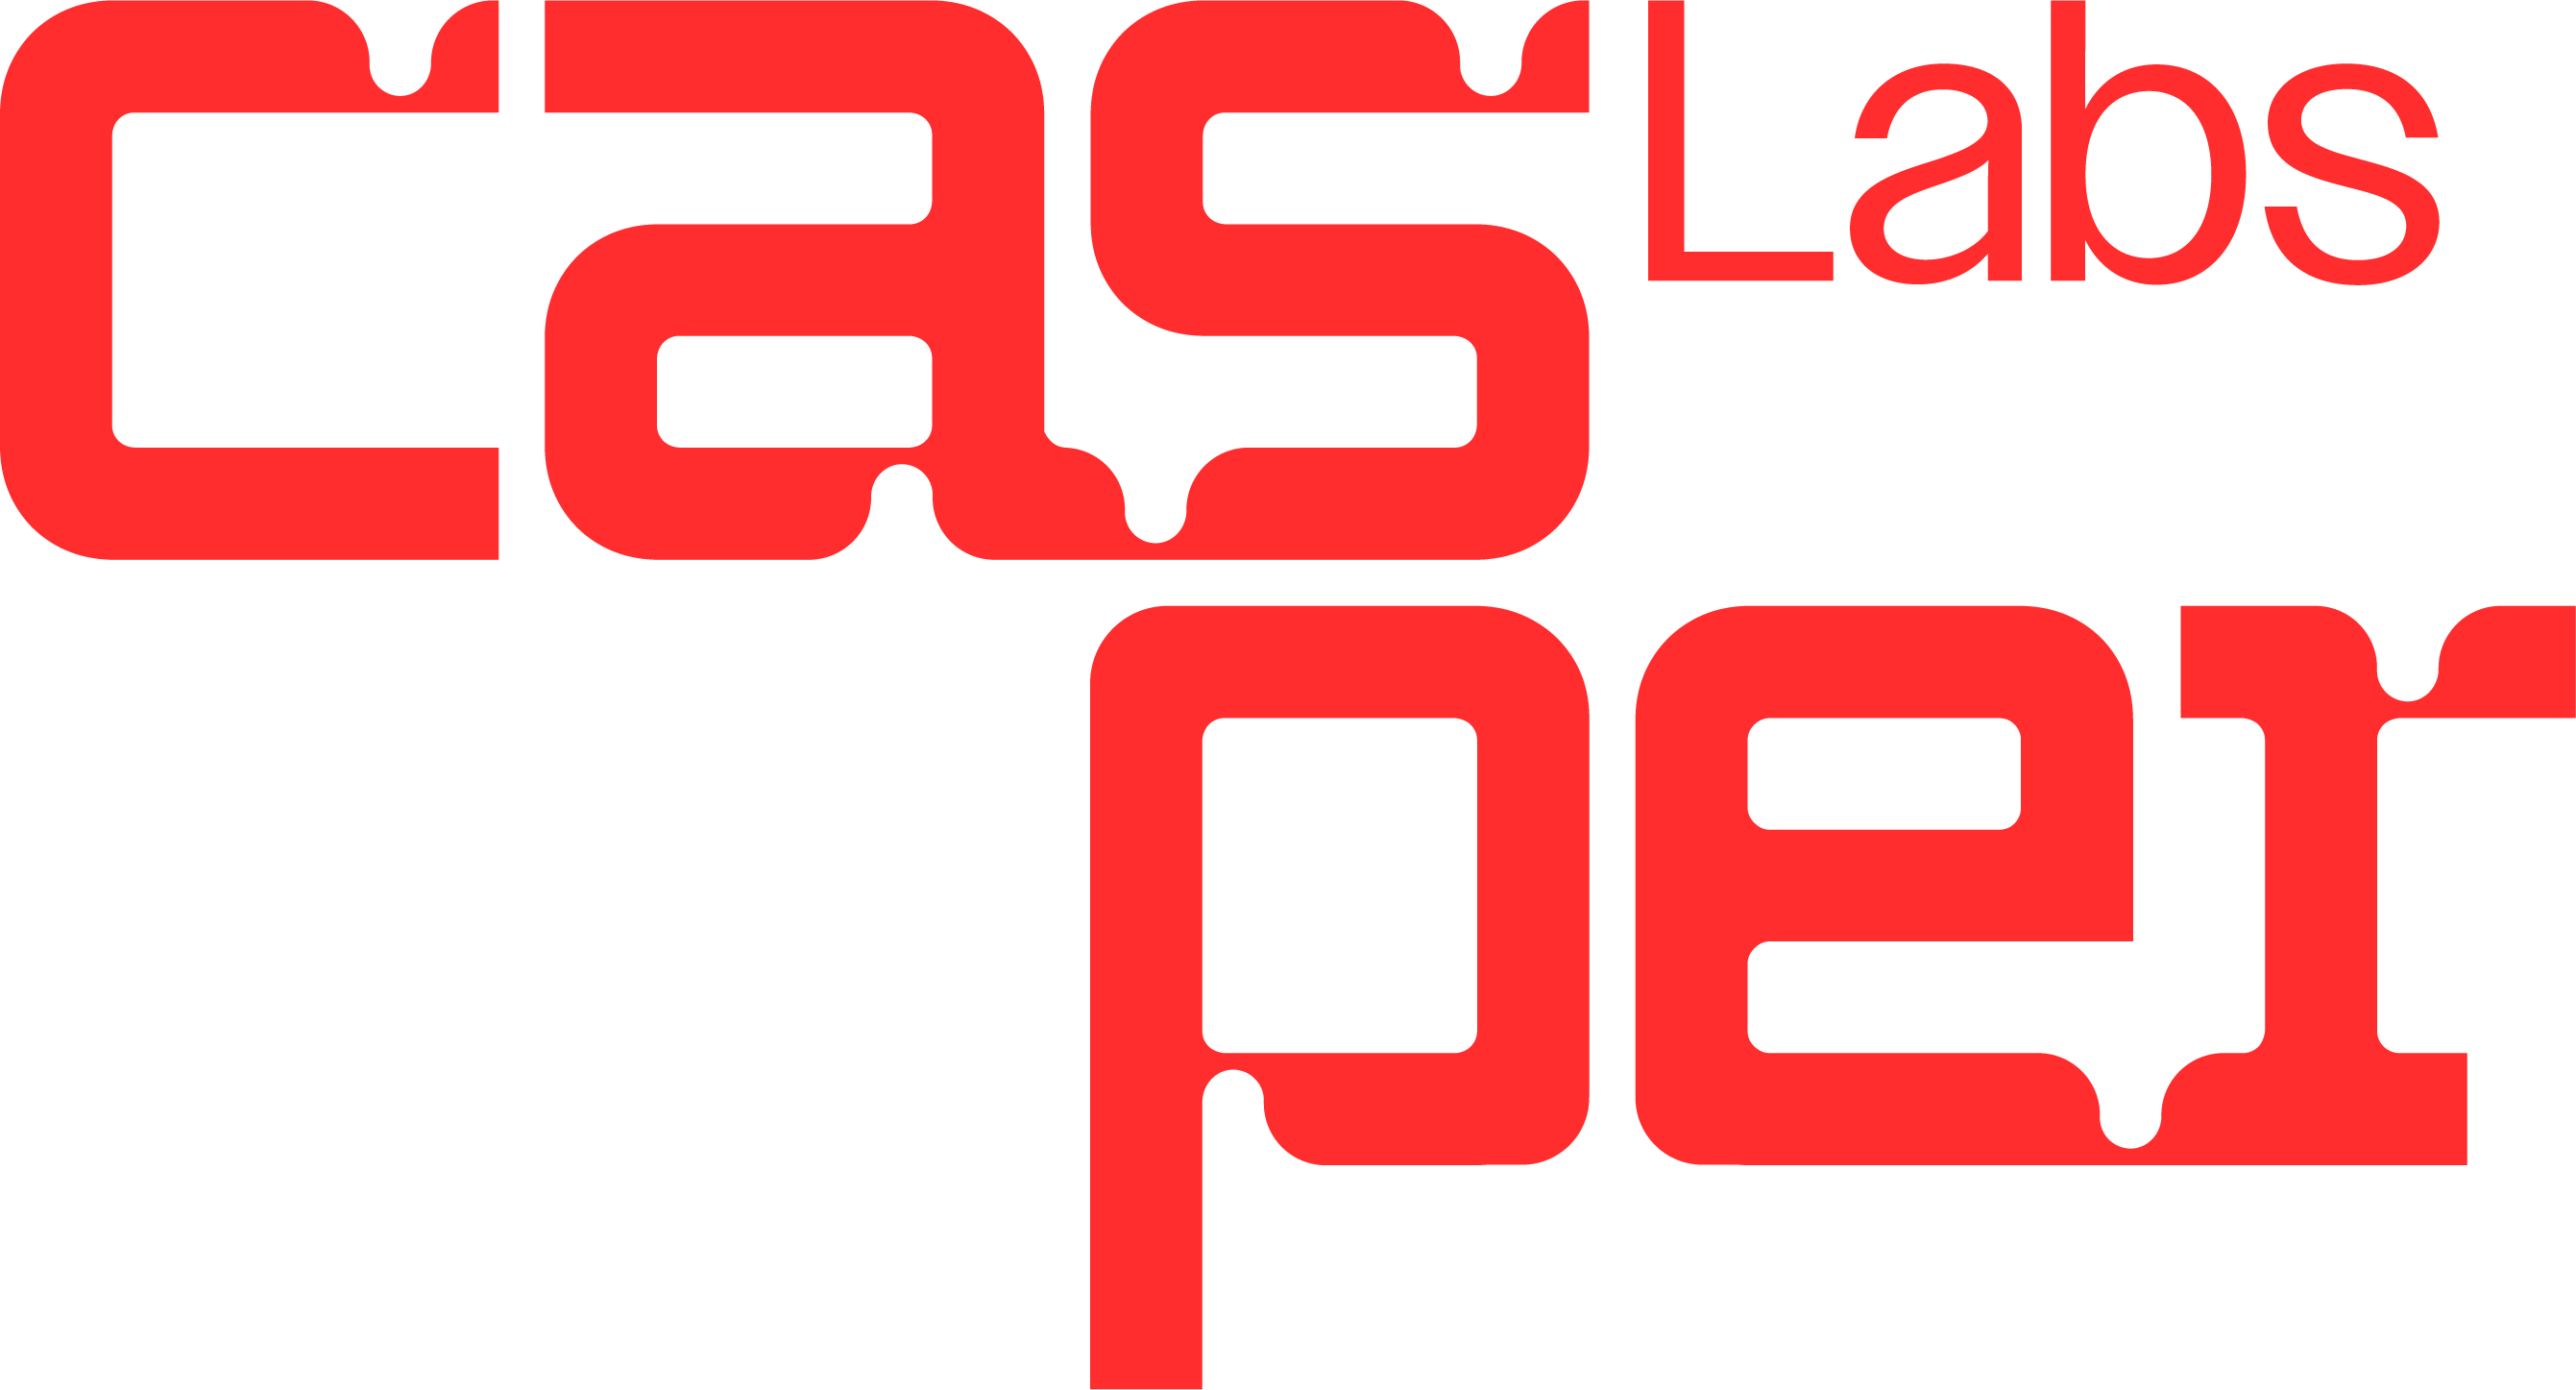 casper labs logo